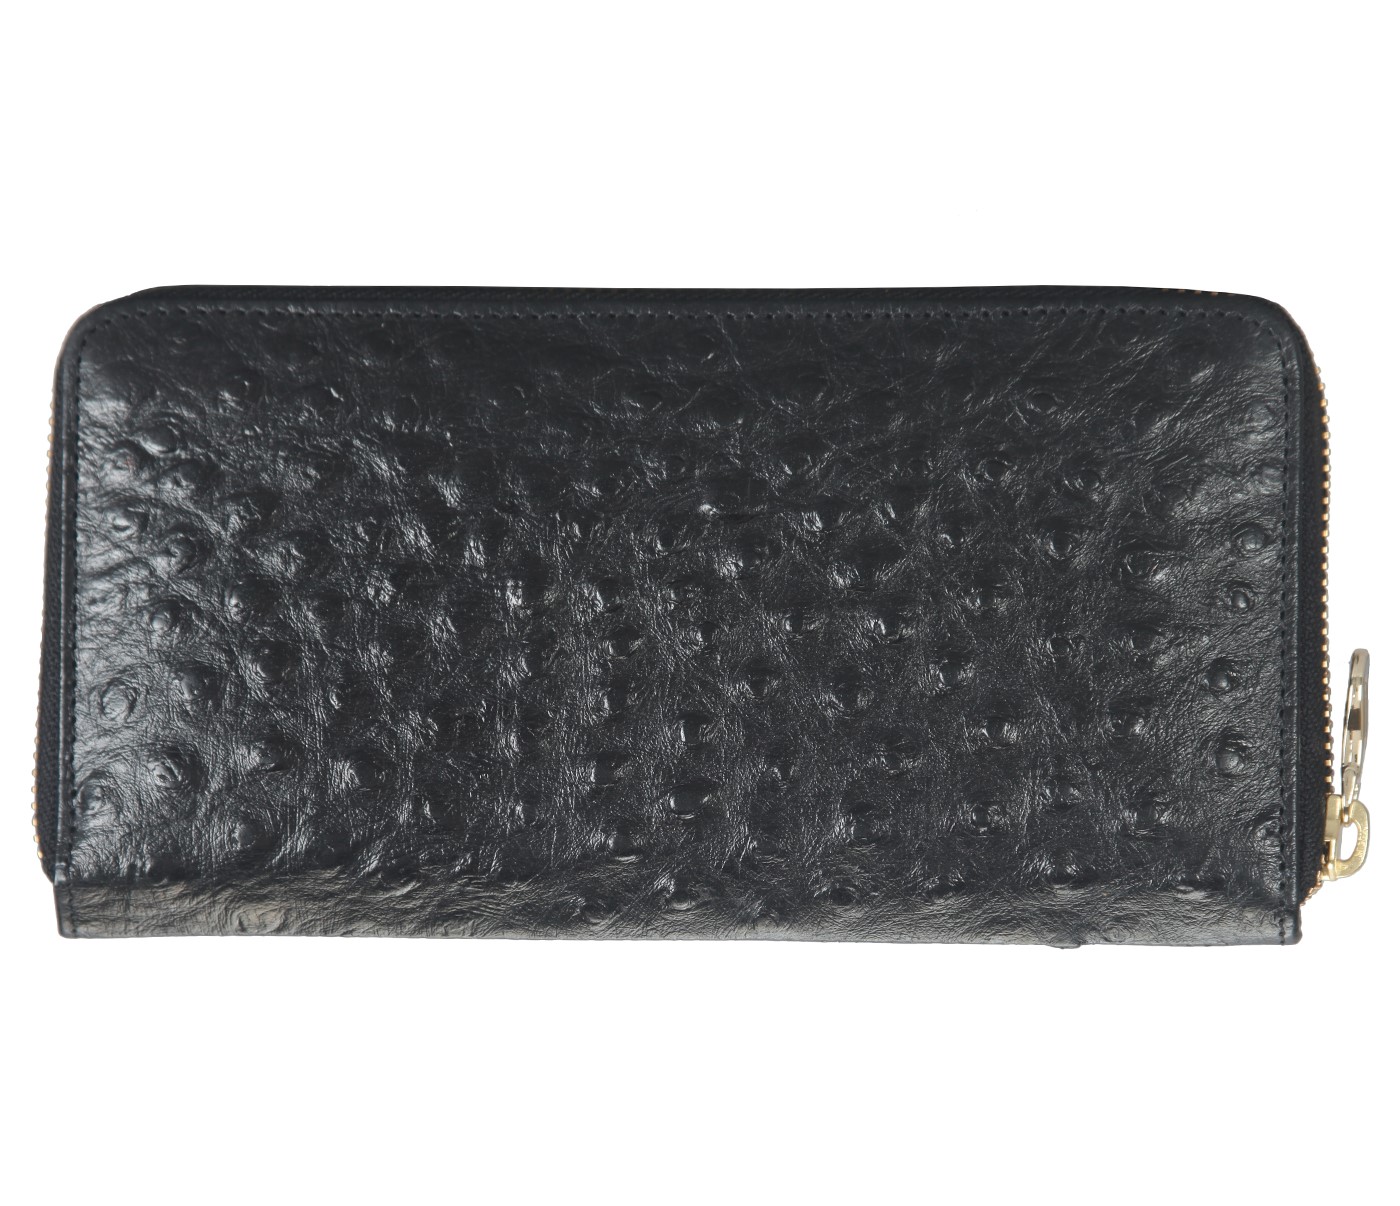 Wallet-Beyonce-Women's wallet cum clutch in Genuine Leather - Black